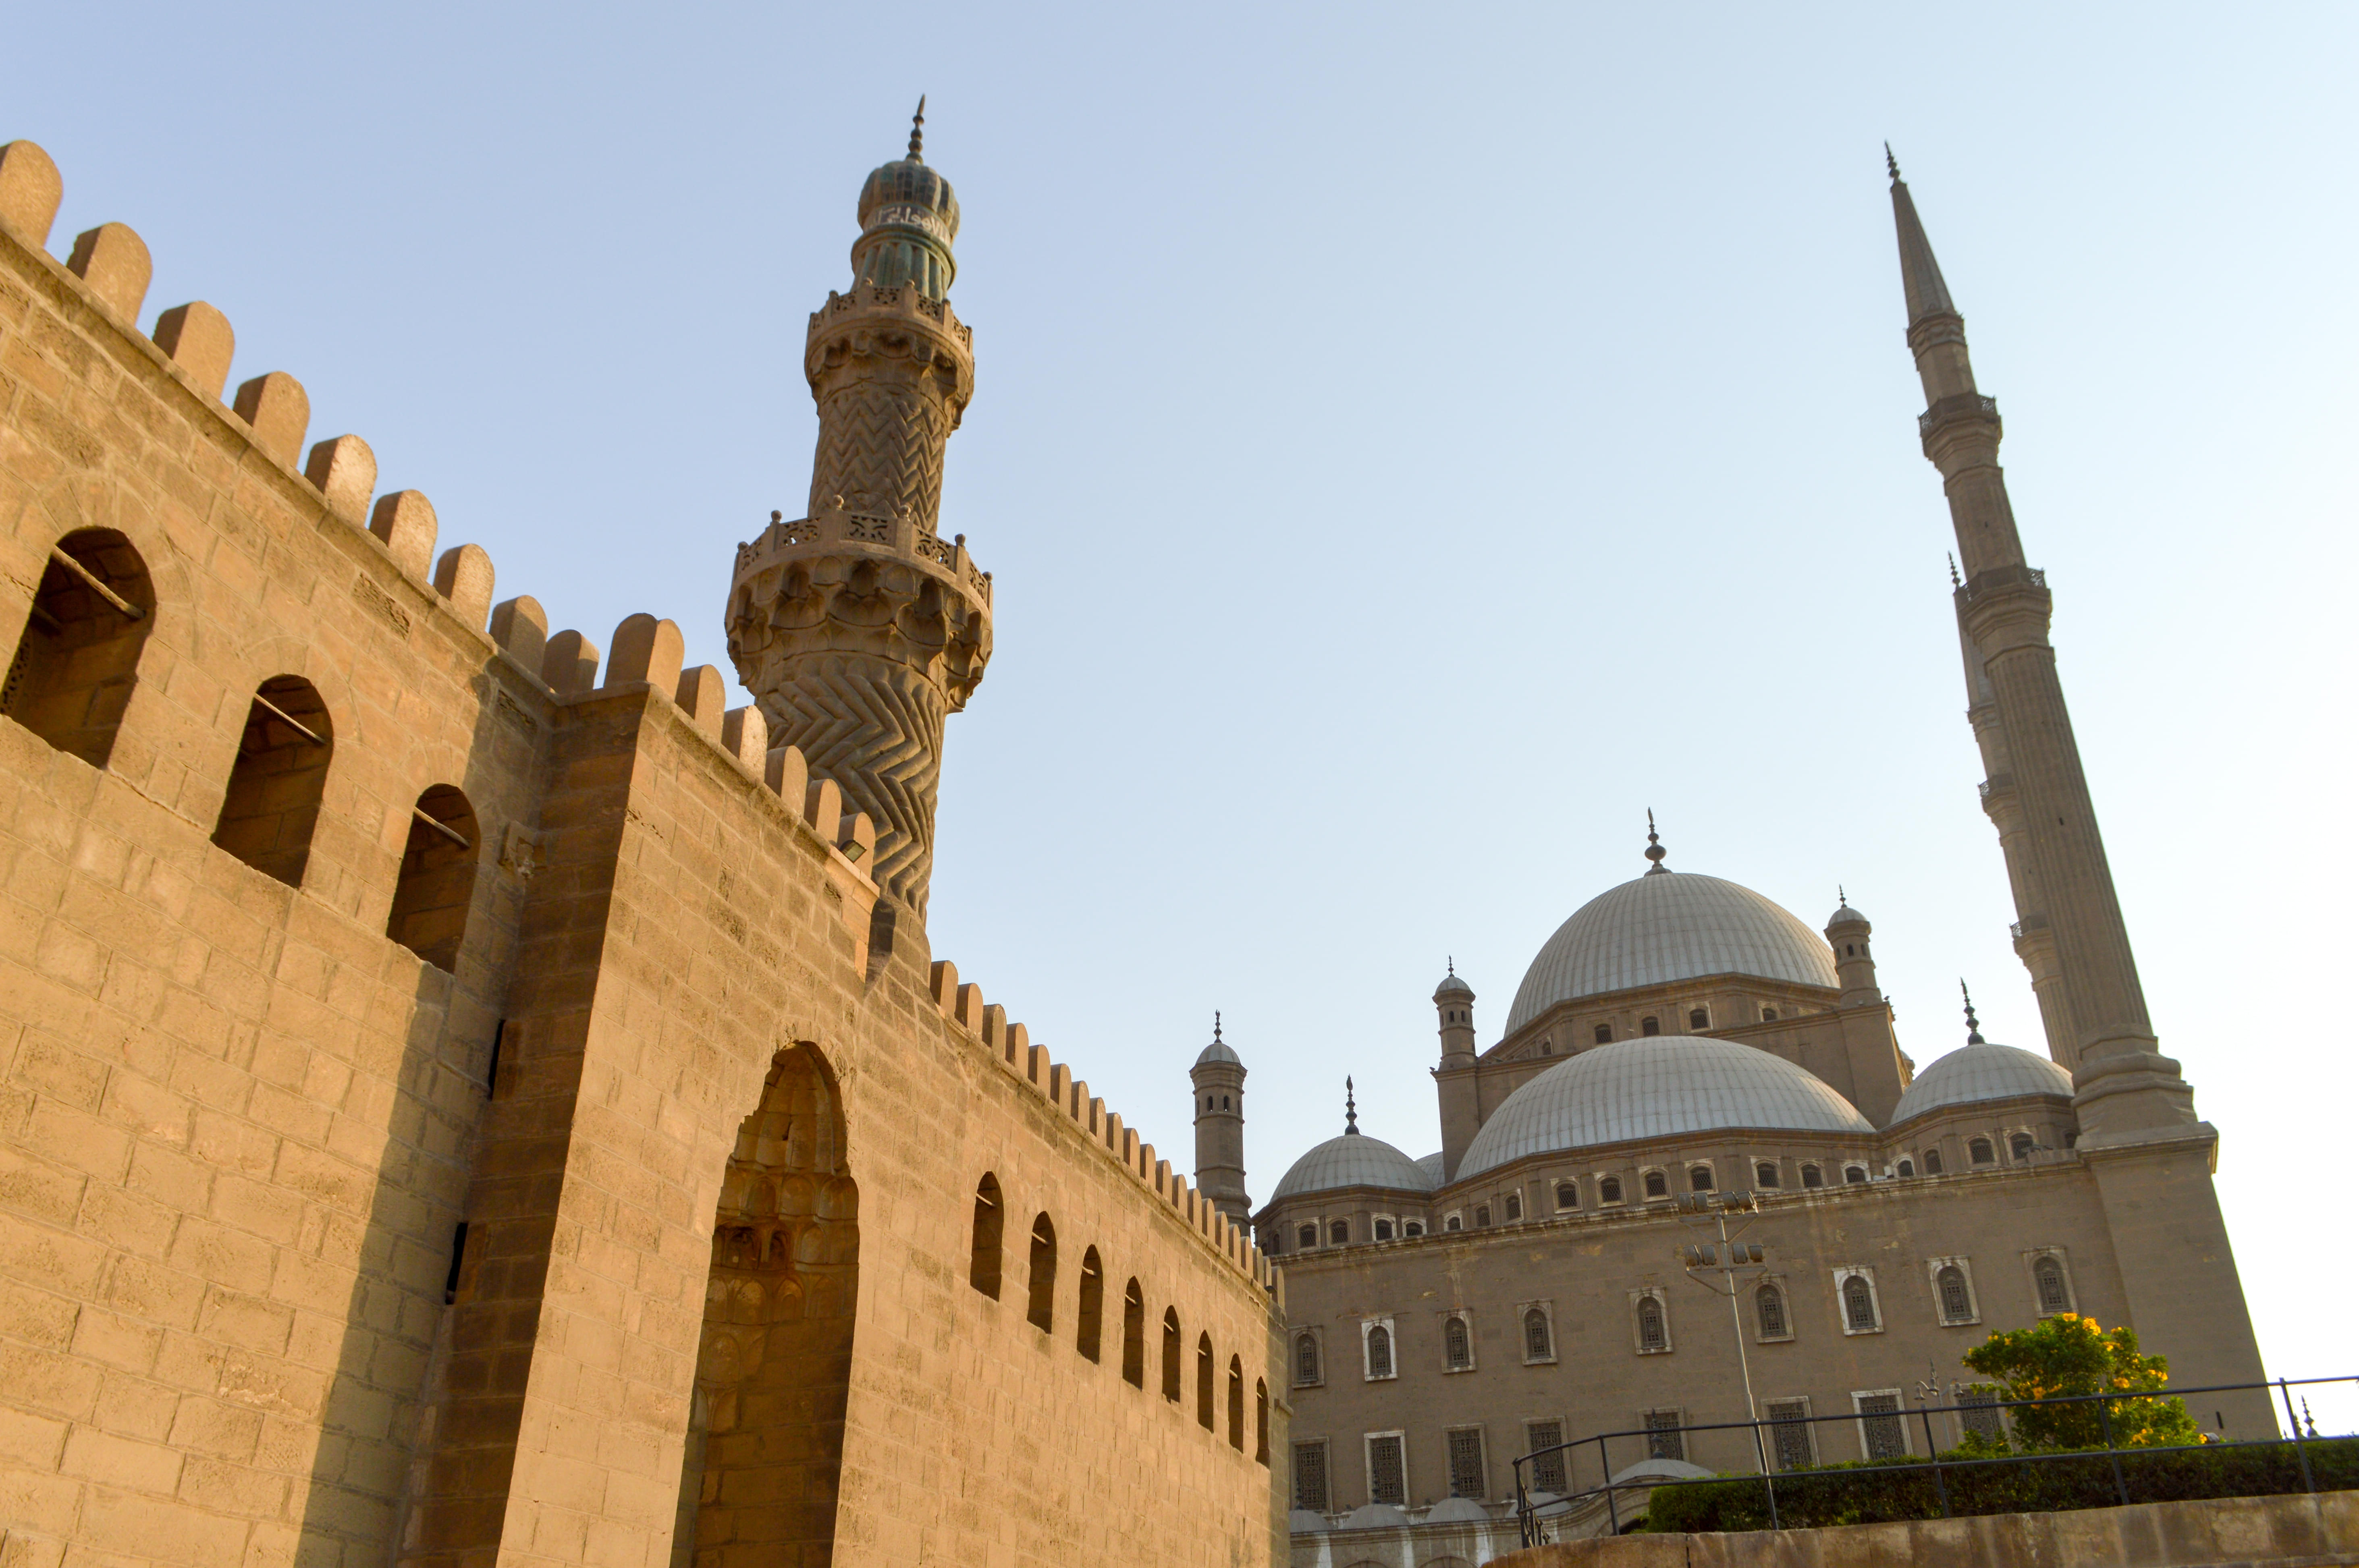 Climb the Minarets for Panoramic Views